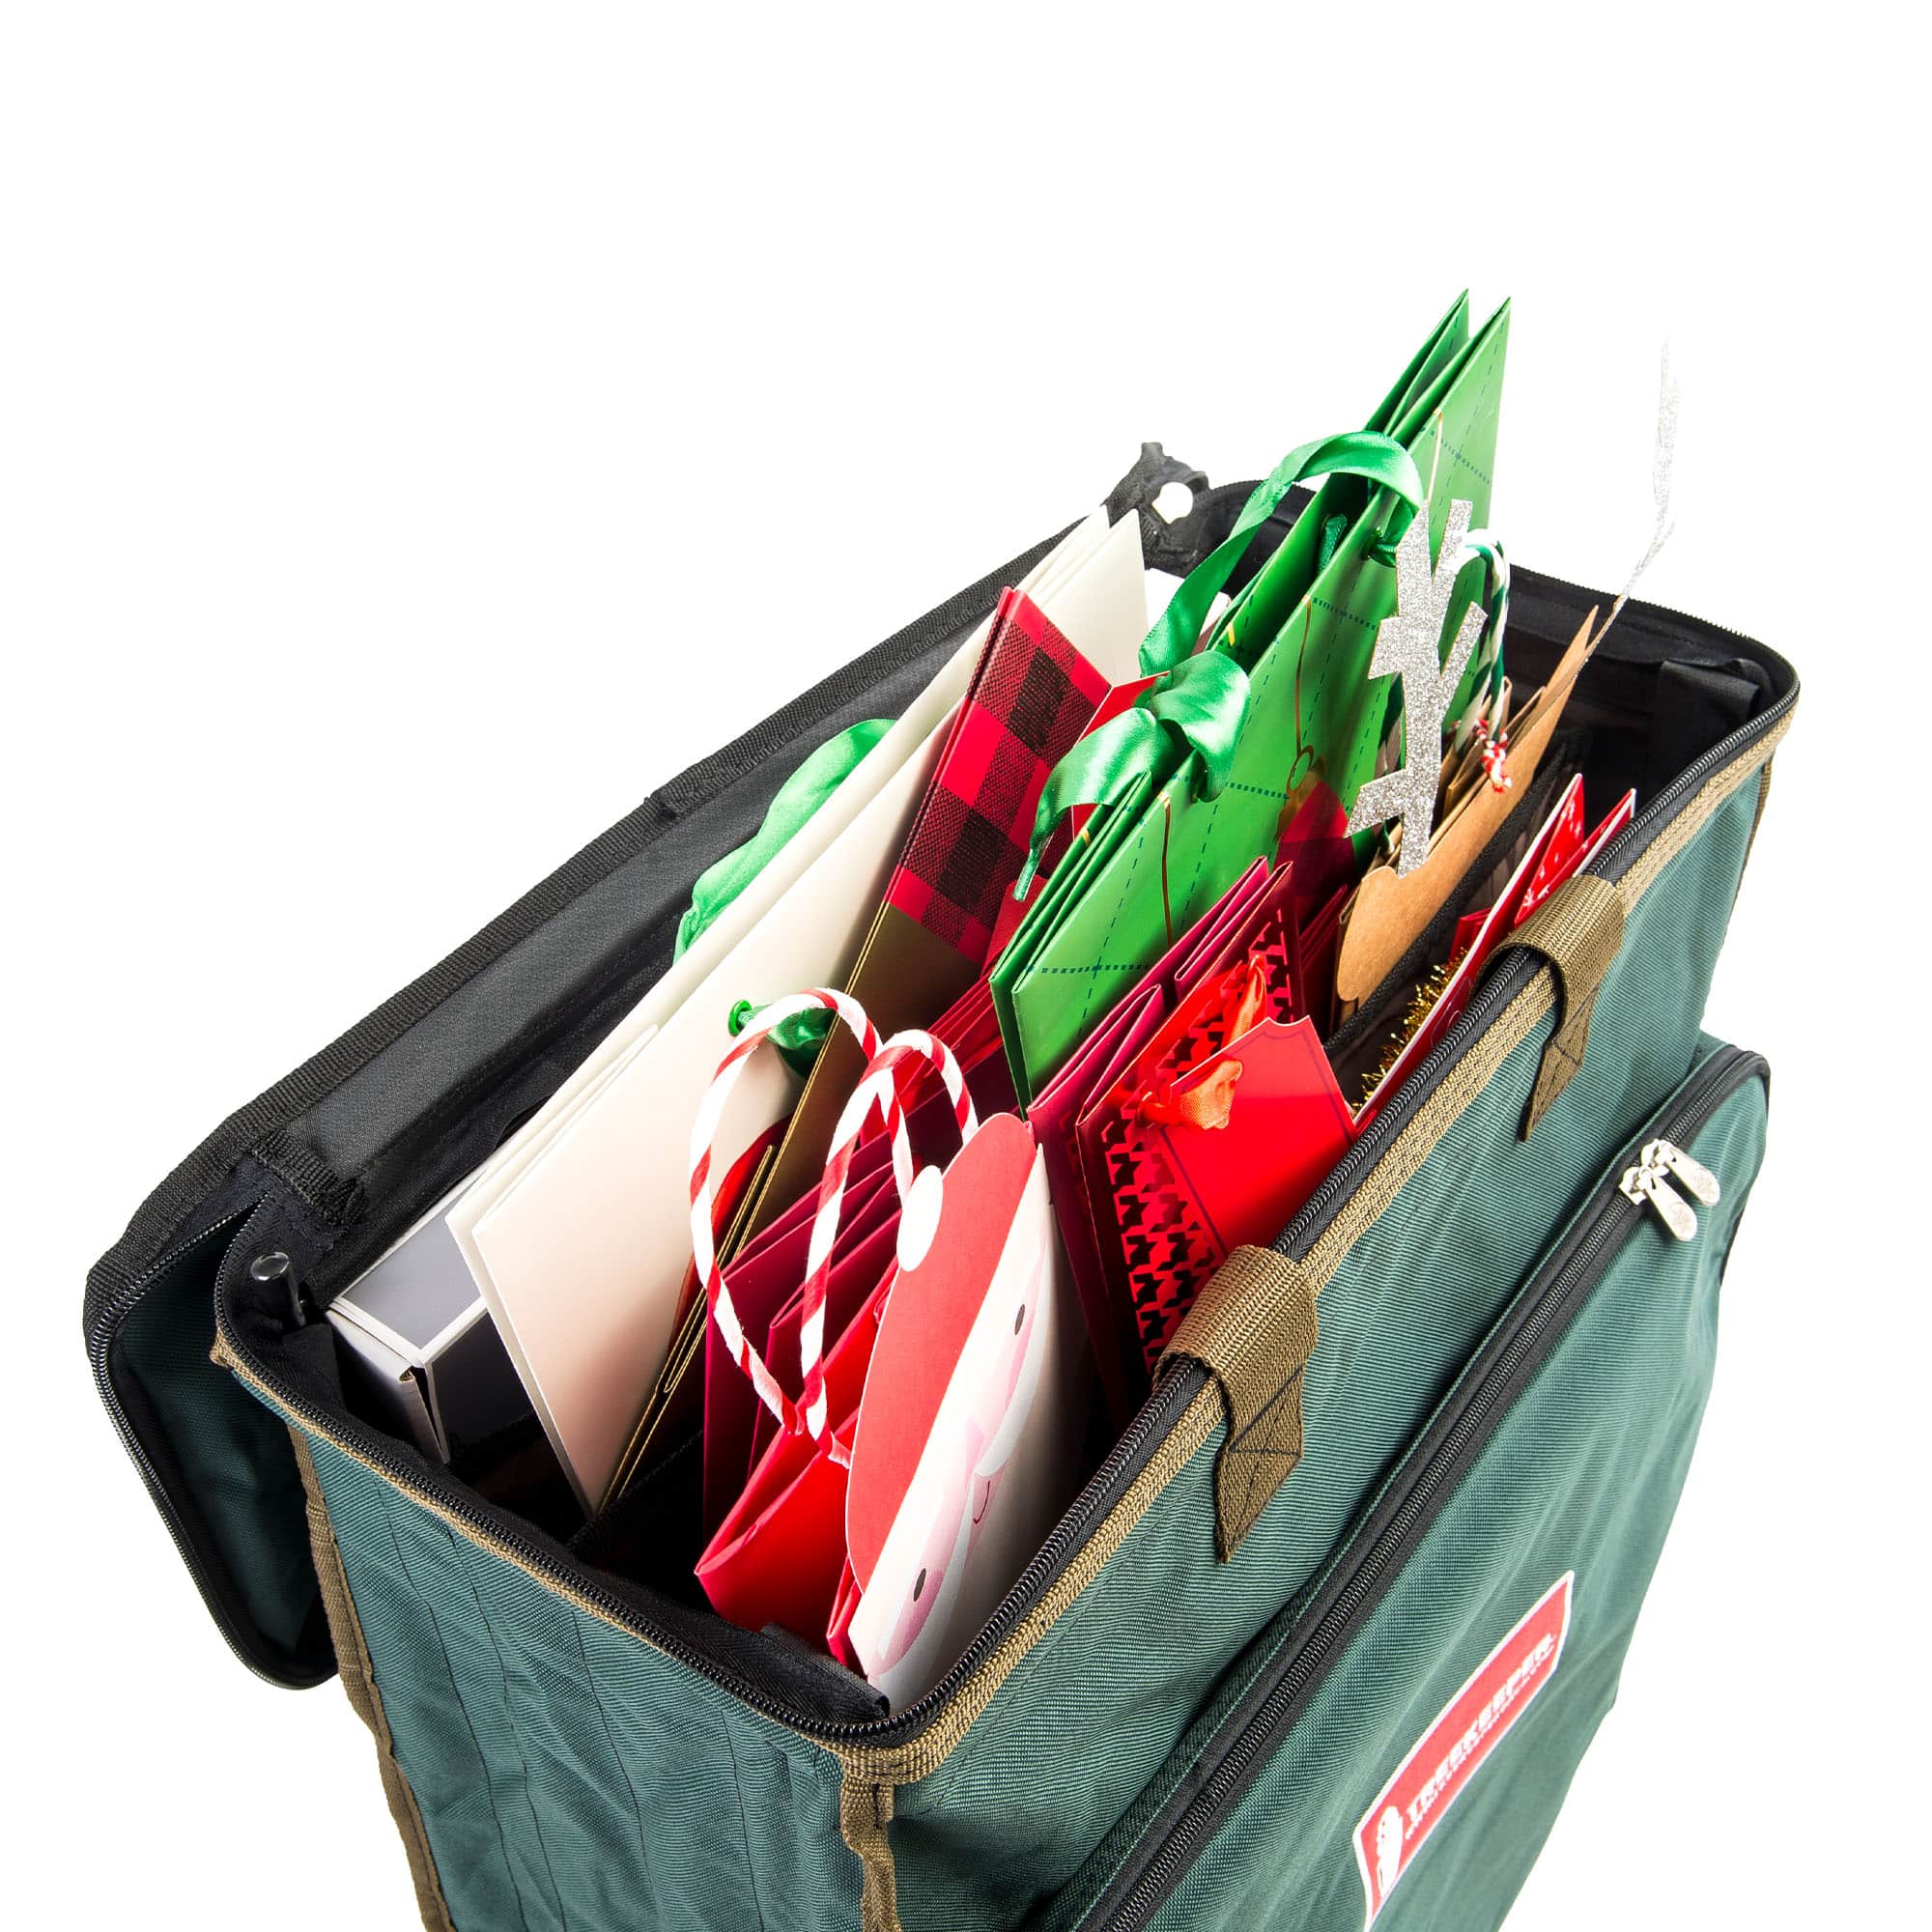 TreeKeeper Tissue Paper & Gift Bag Storage Bag